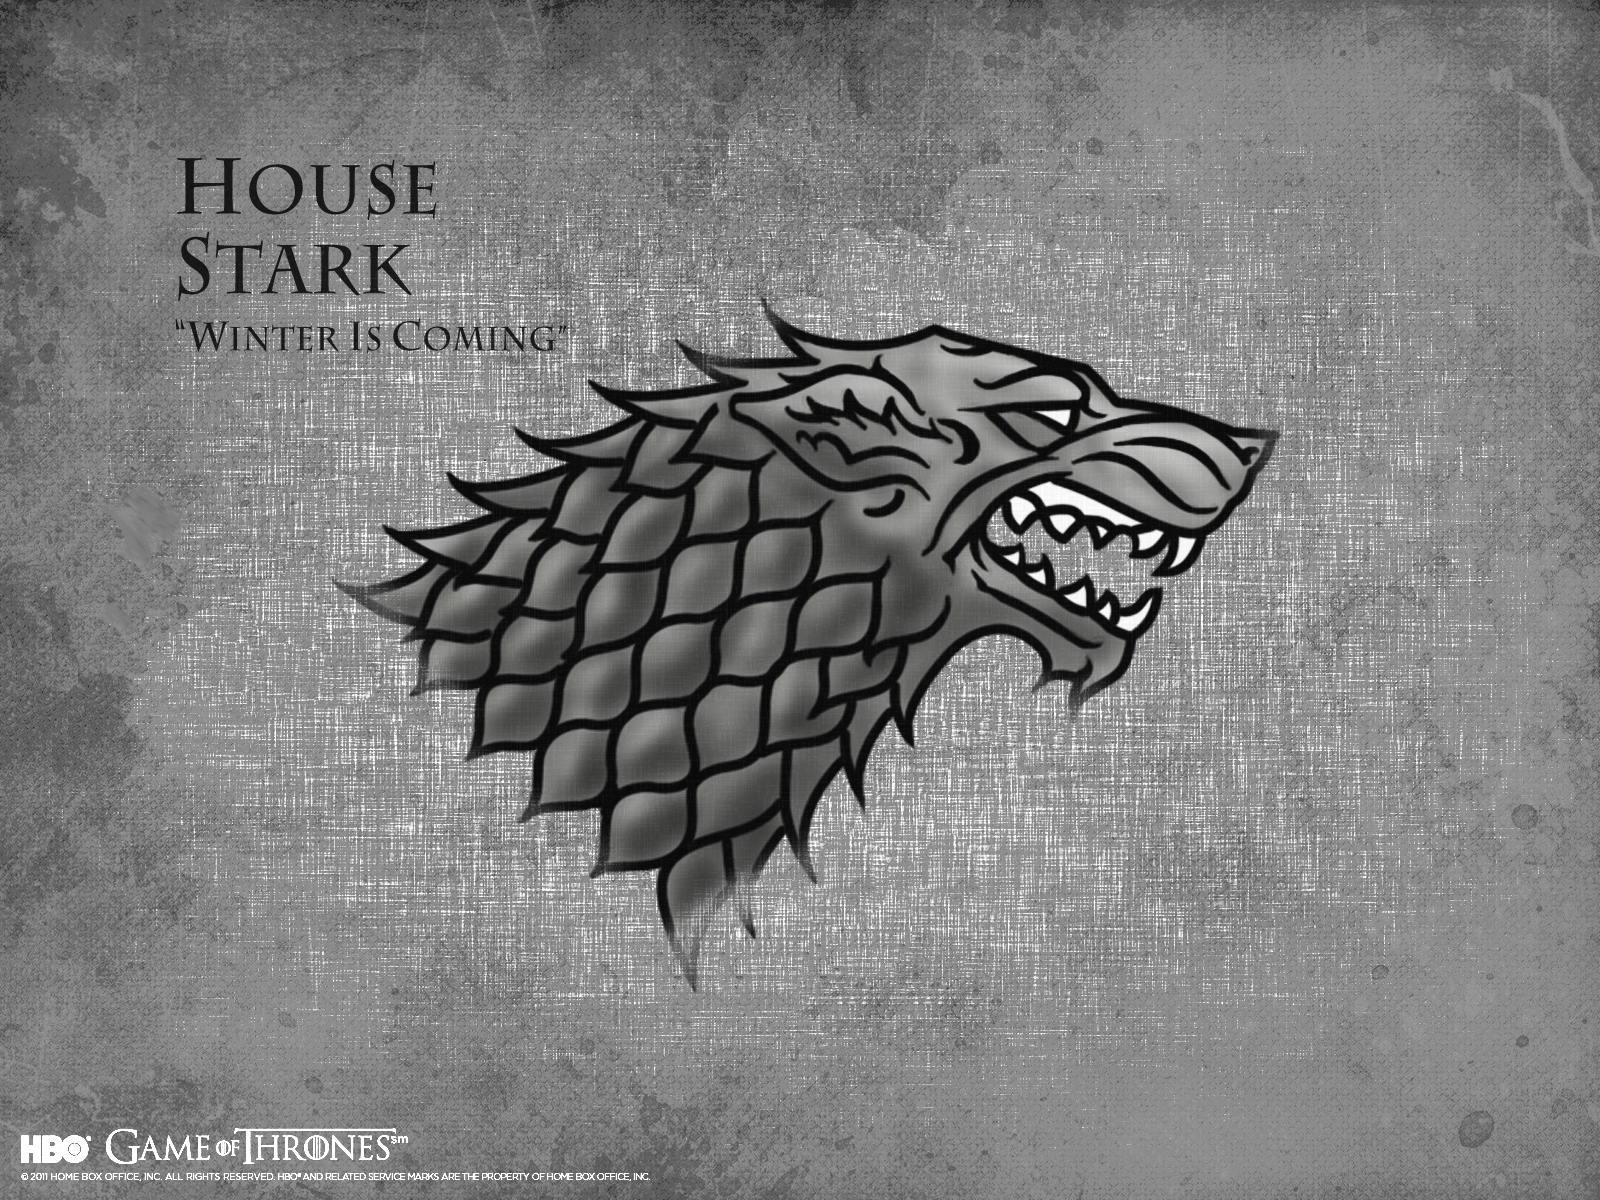 House Stark - Game of Thrones Wallpaper (31246389) - Fanpop